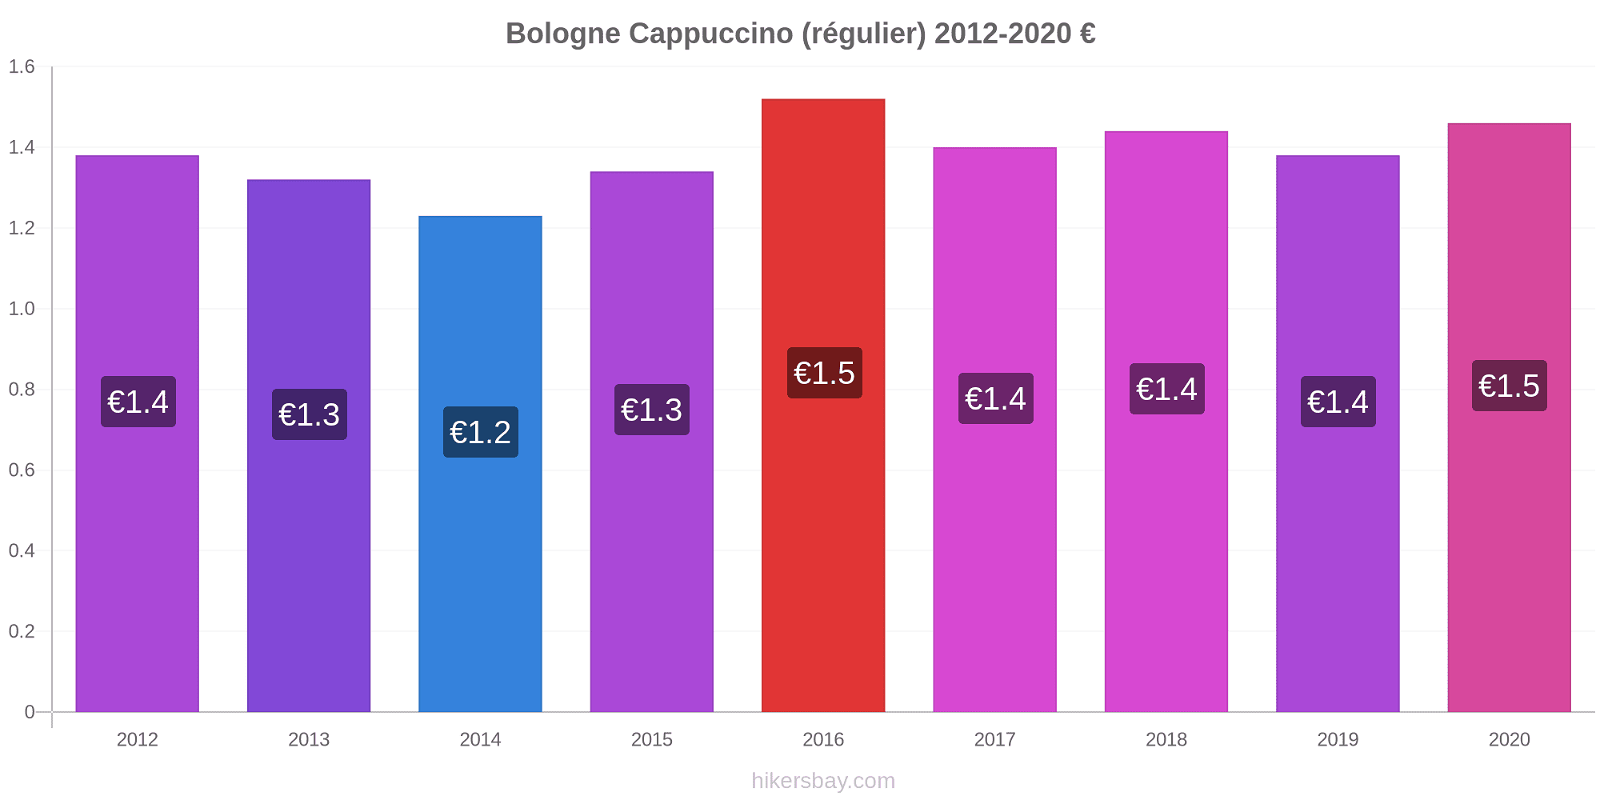 Bologne changements de prix Cappuccino (régulier) hikersbay.com